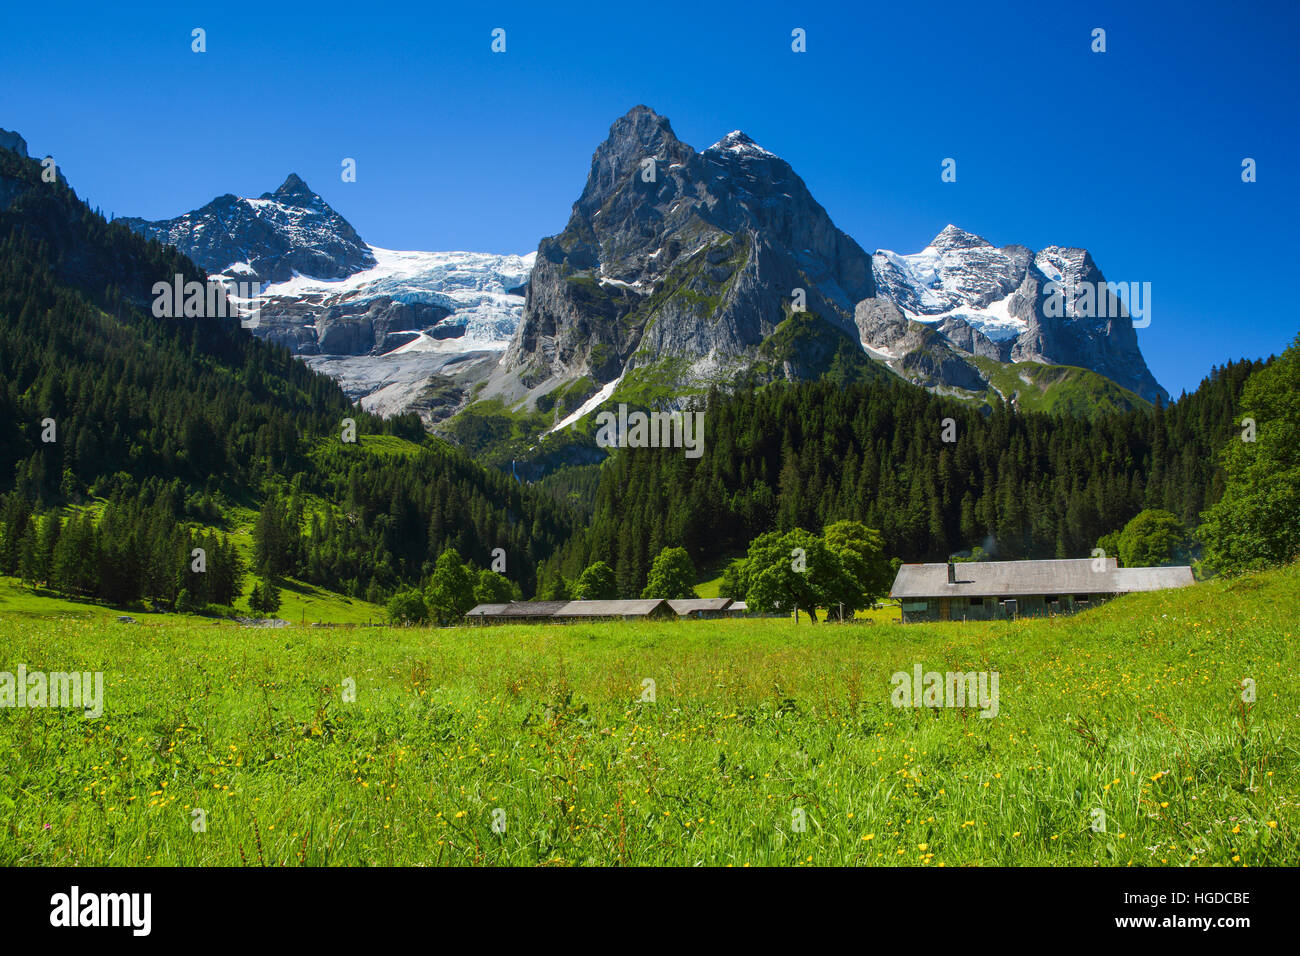 Wellhorn - 3192 ms, Rosenlaui glacier, valley of Rosenlaui, Bernese Oberland, Switzerland Stock Photo